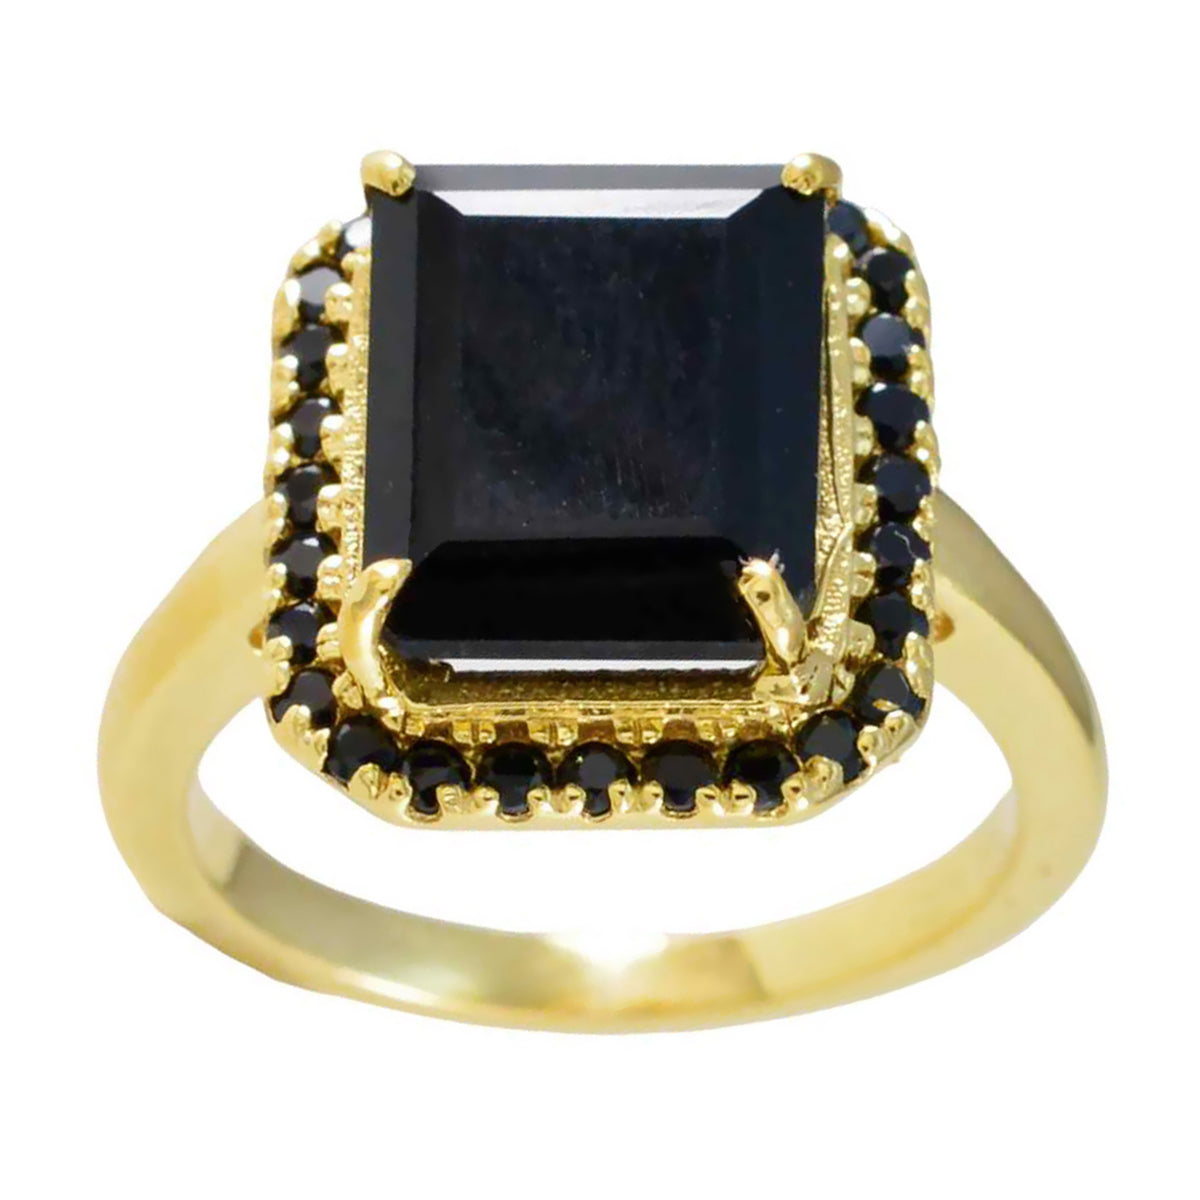 Precioso anillo de plata riyo con chapado en oro amarillo, piedra de ónix negro, engaste de punta en forma de octágono, joyería antigua, anillo de Pascua